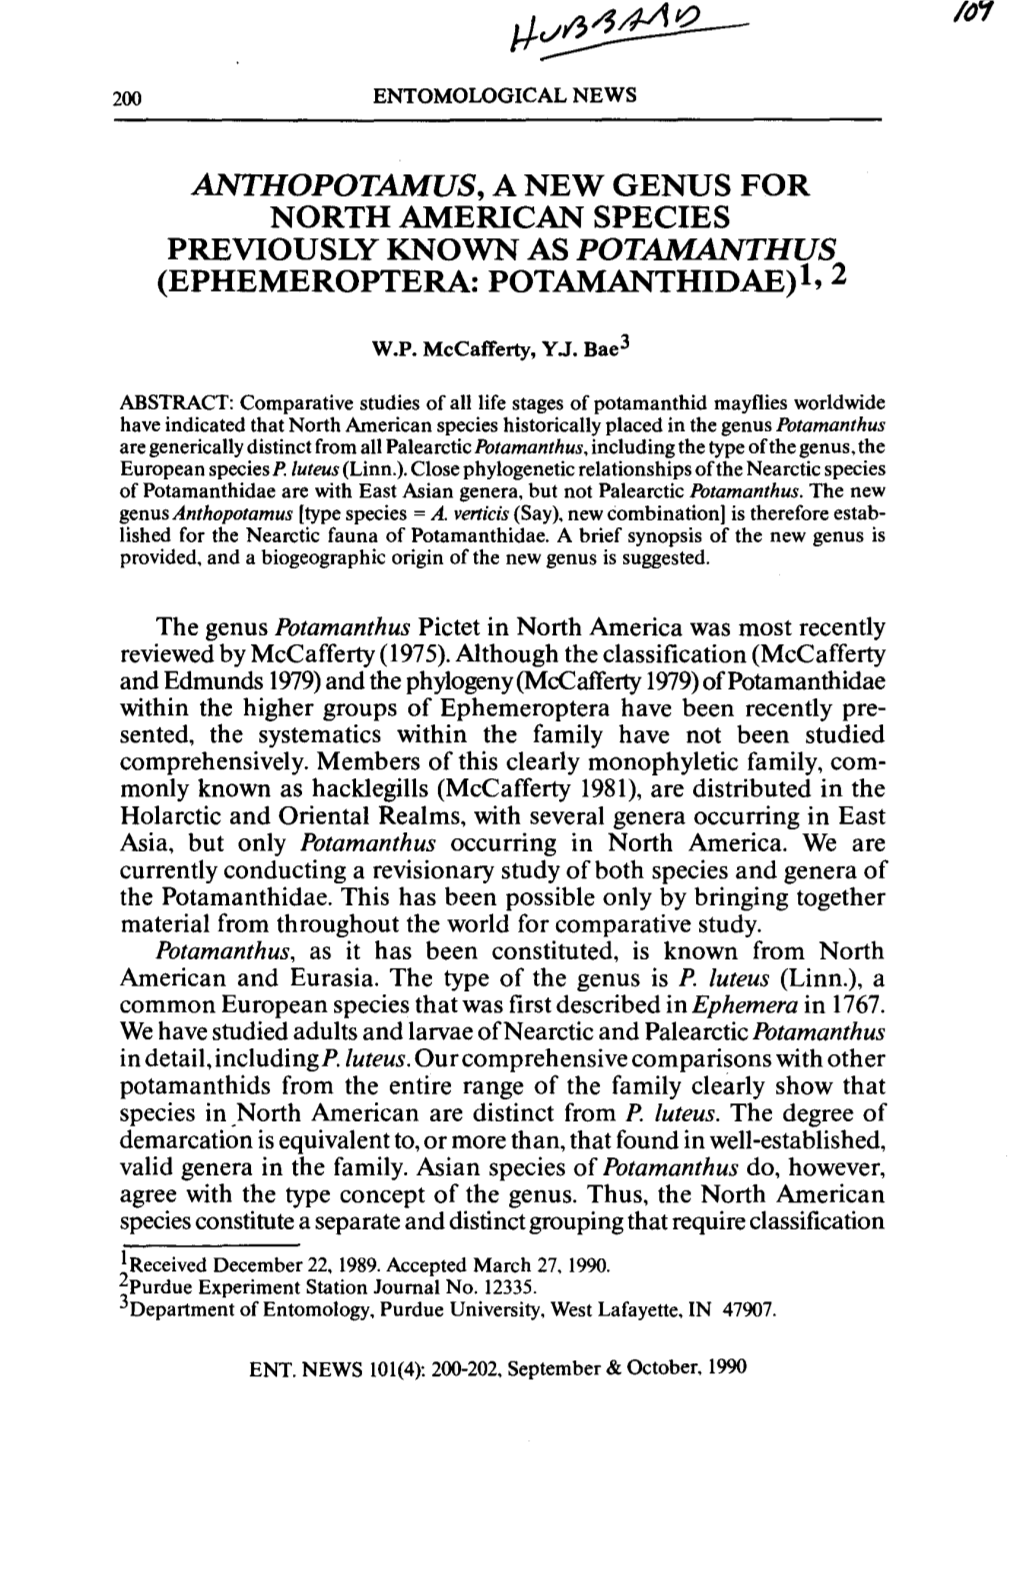 ANTHOPOTAMUS, a NEW GENUS for NORTH AMERICAN SPECIES PREVIOUSLY KNOWN AS POTAMANTHUS (EPHEMEROPTERA: POTAMANTHIDAE)L, 2